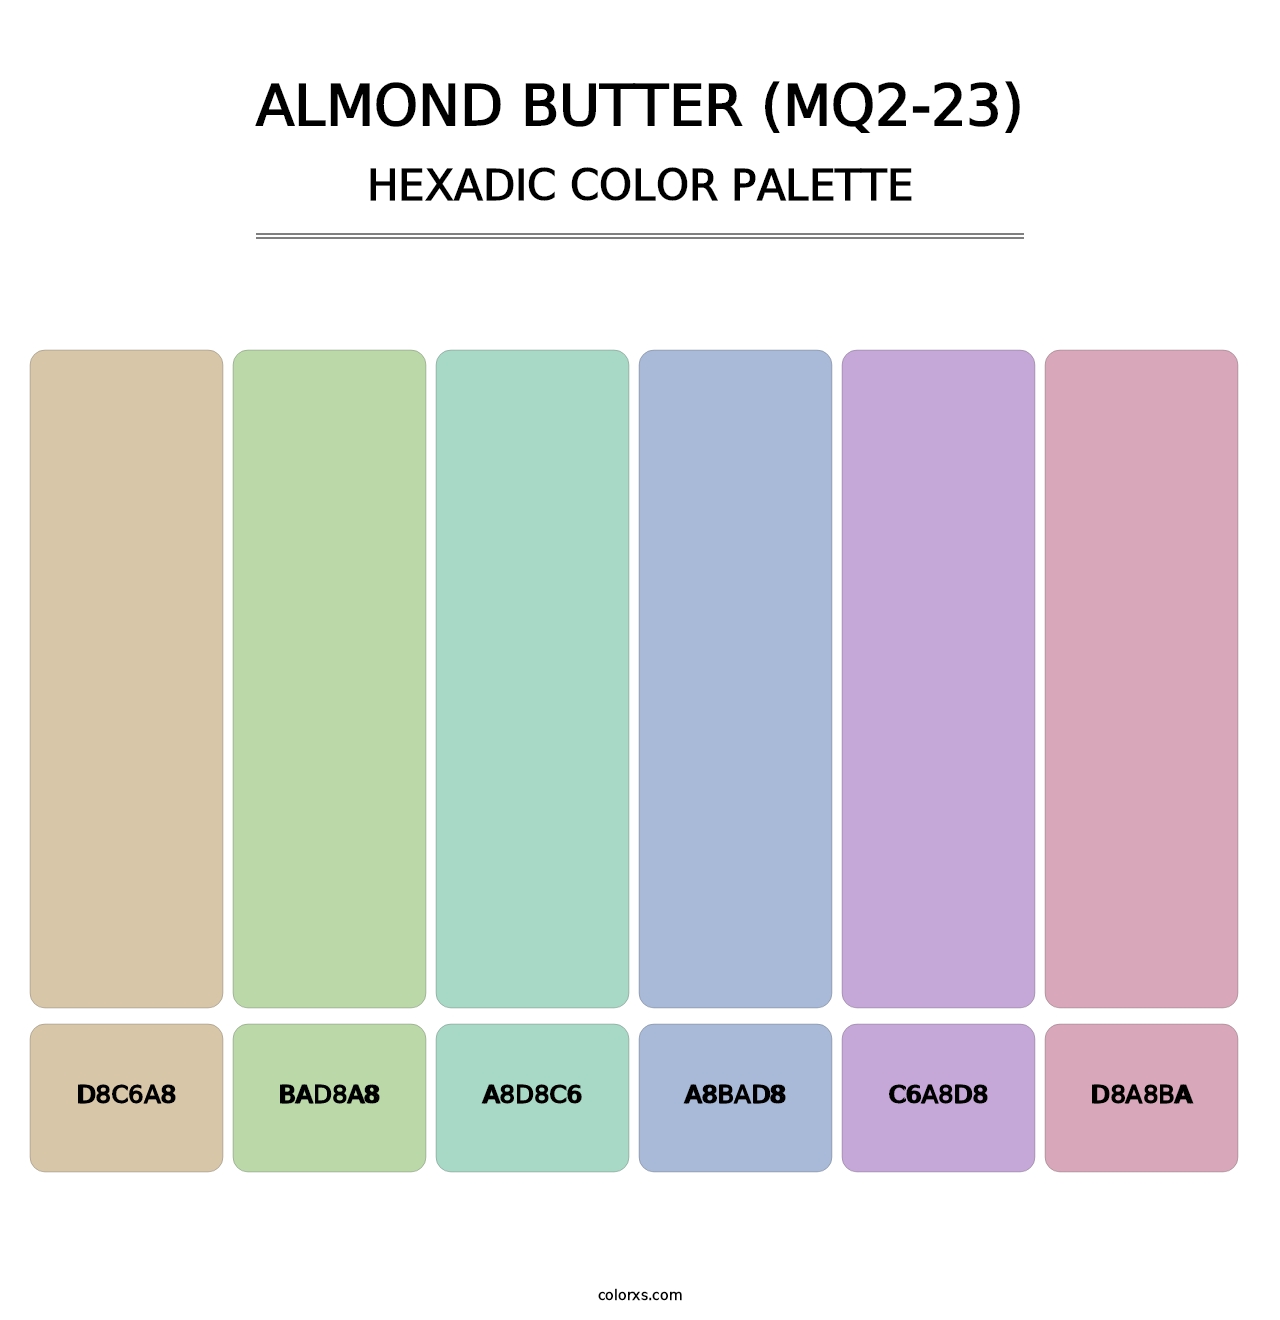 Almond Butter (MQ2-23) - Hexadic Color Palette